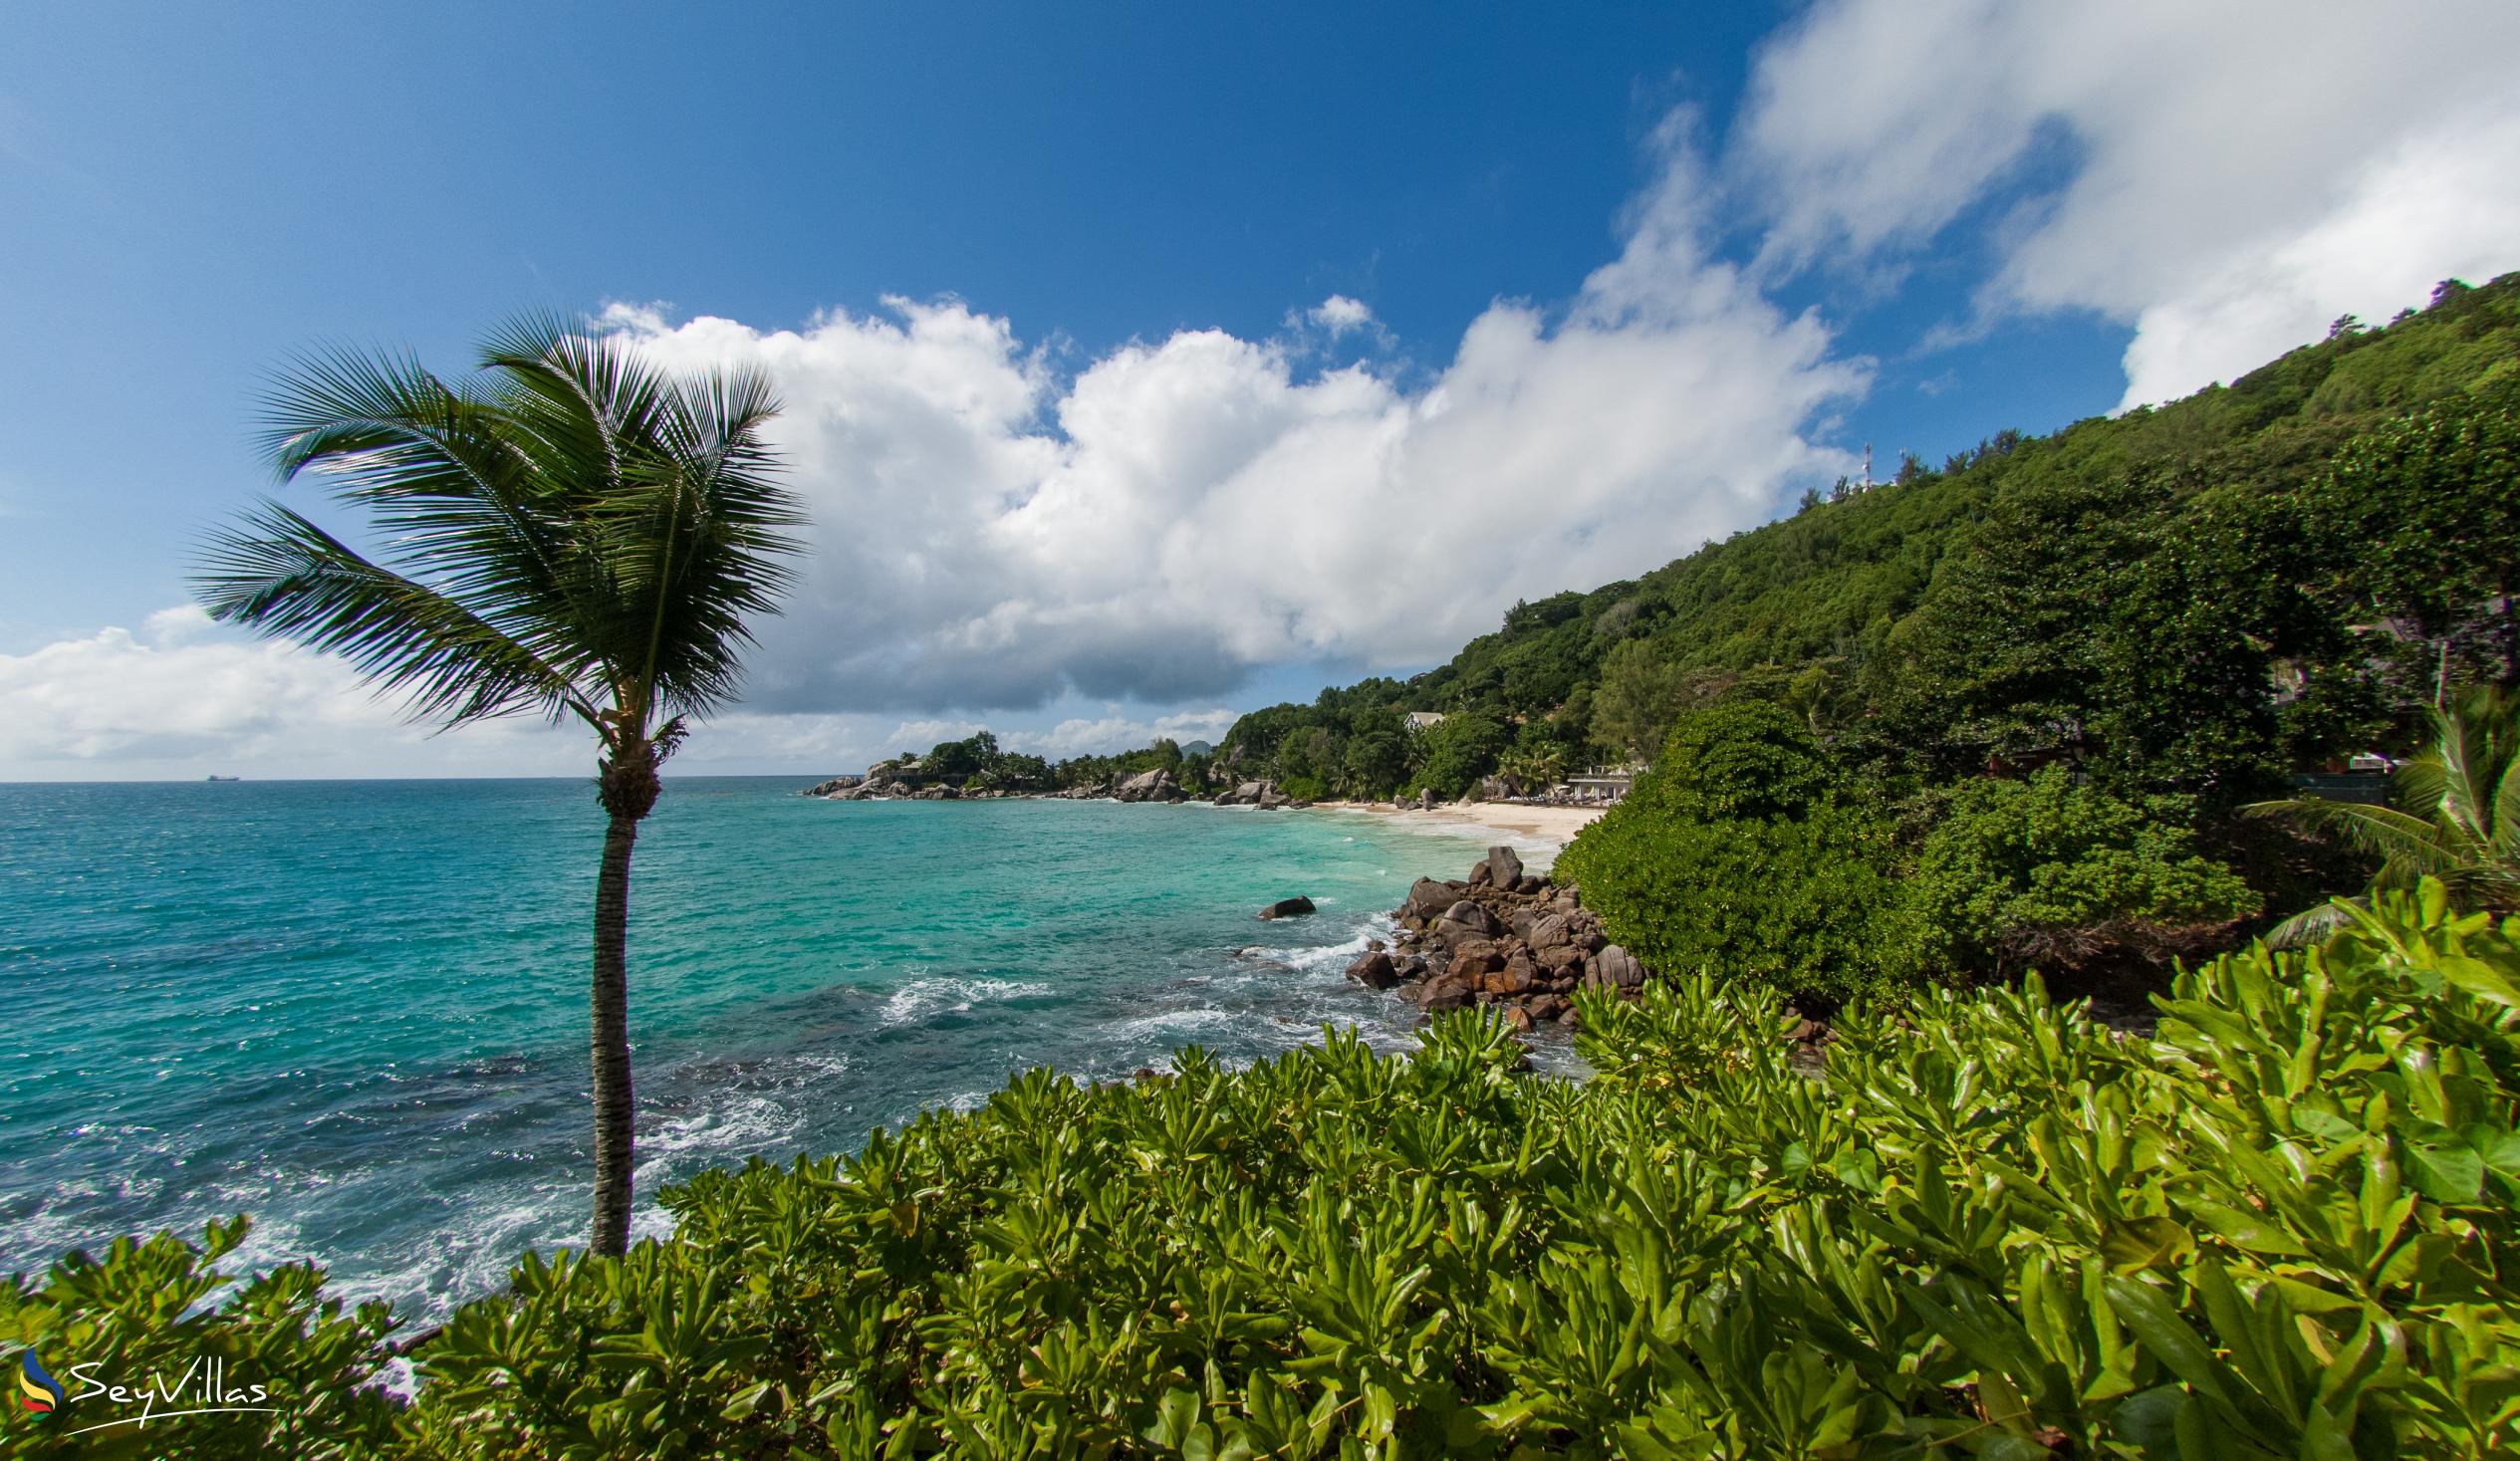 Foto 19: Carana Beach Hotel - Posizione - Mahé (Seychelles)